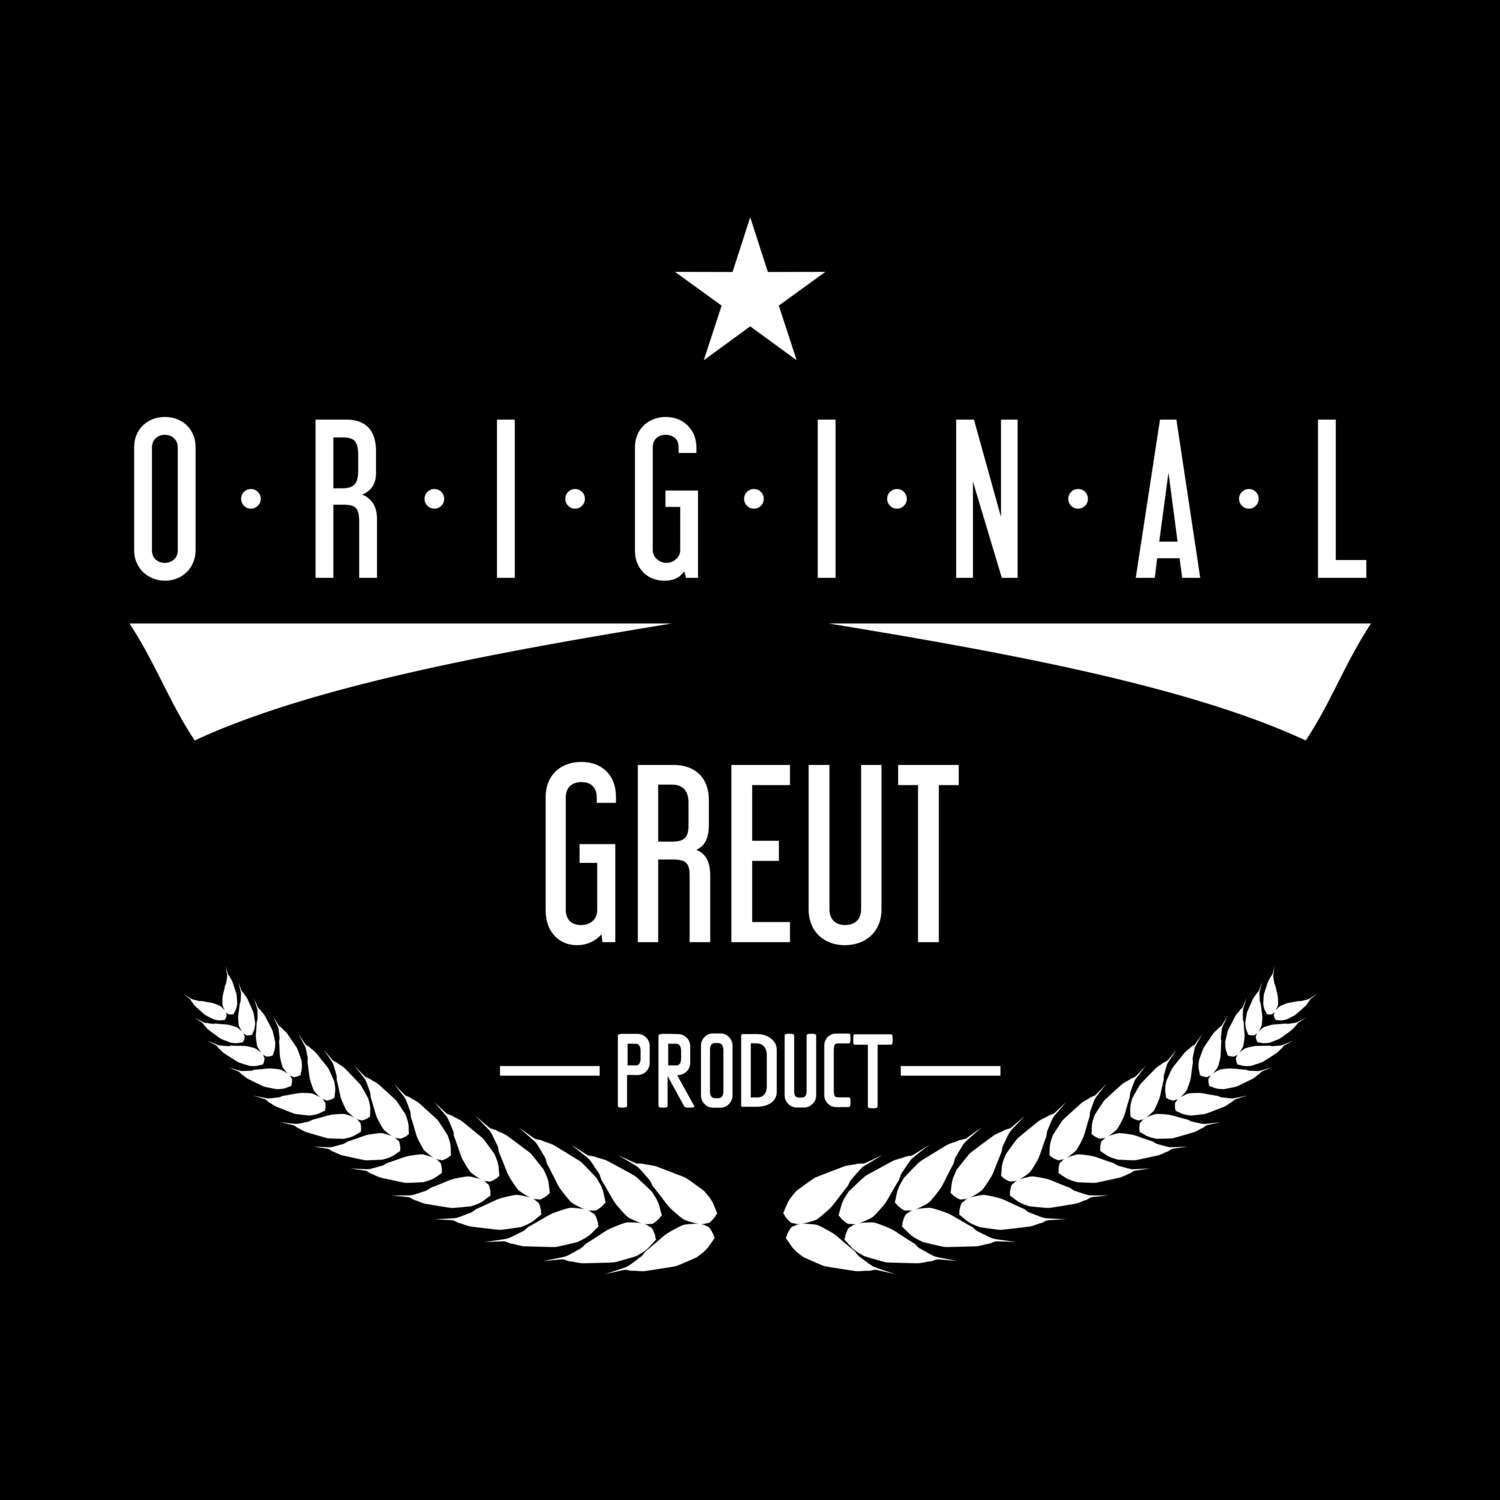 Greut T-Shirt »Original Product«